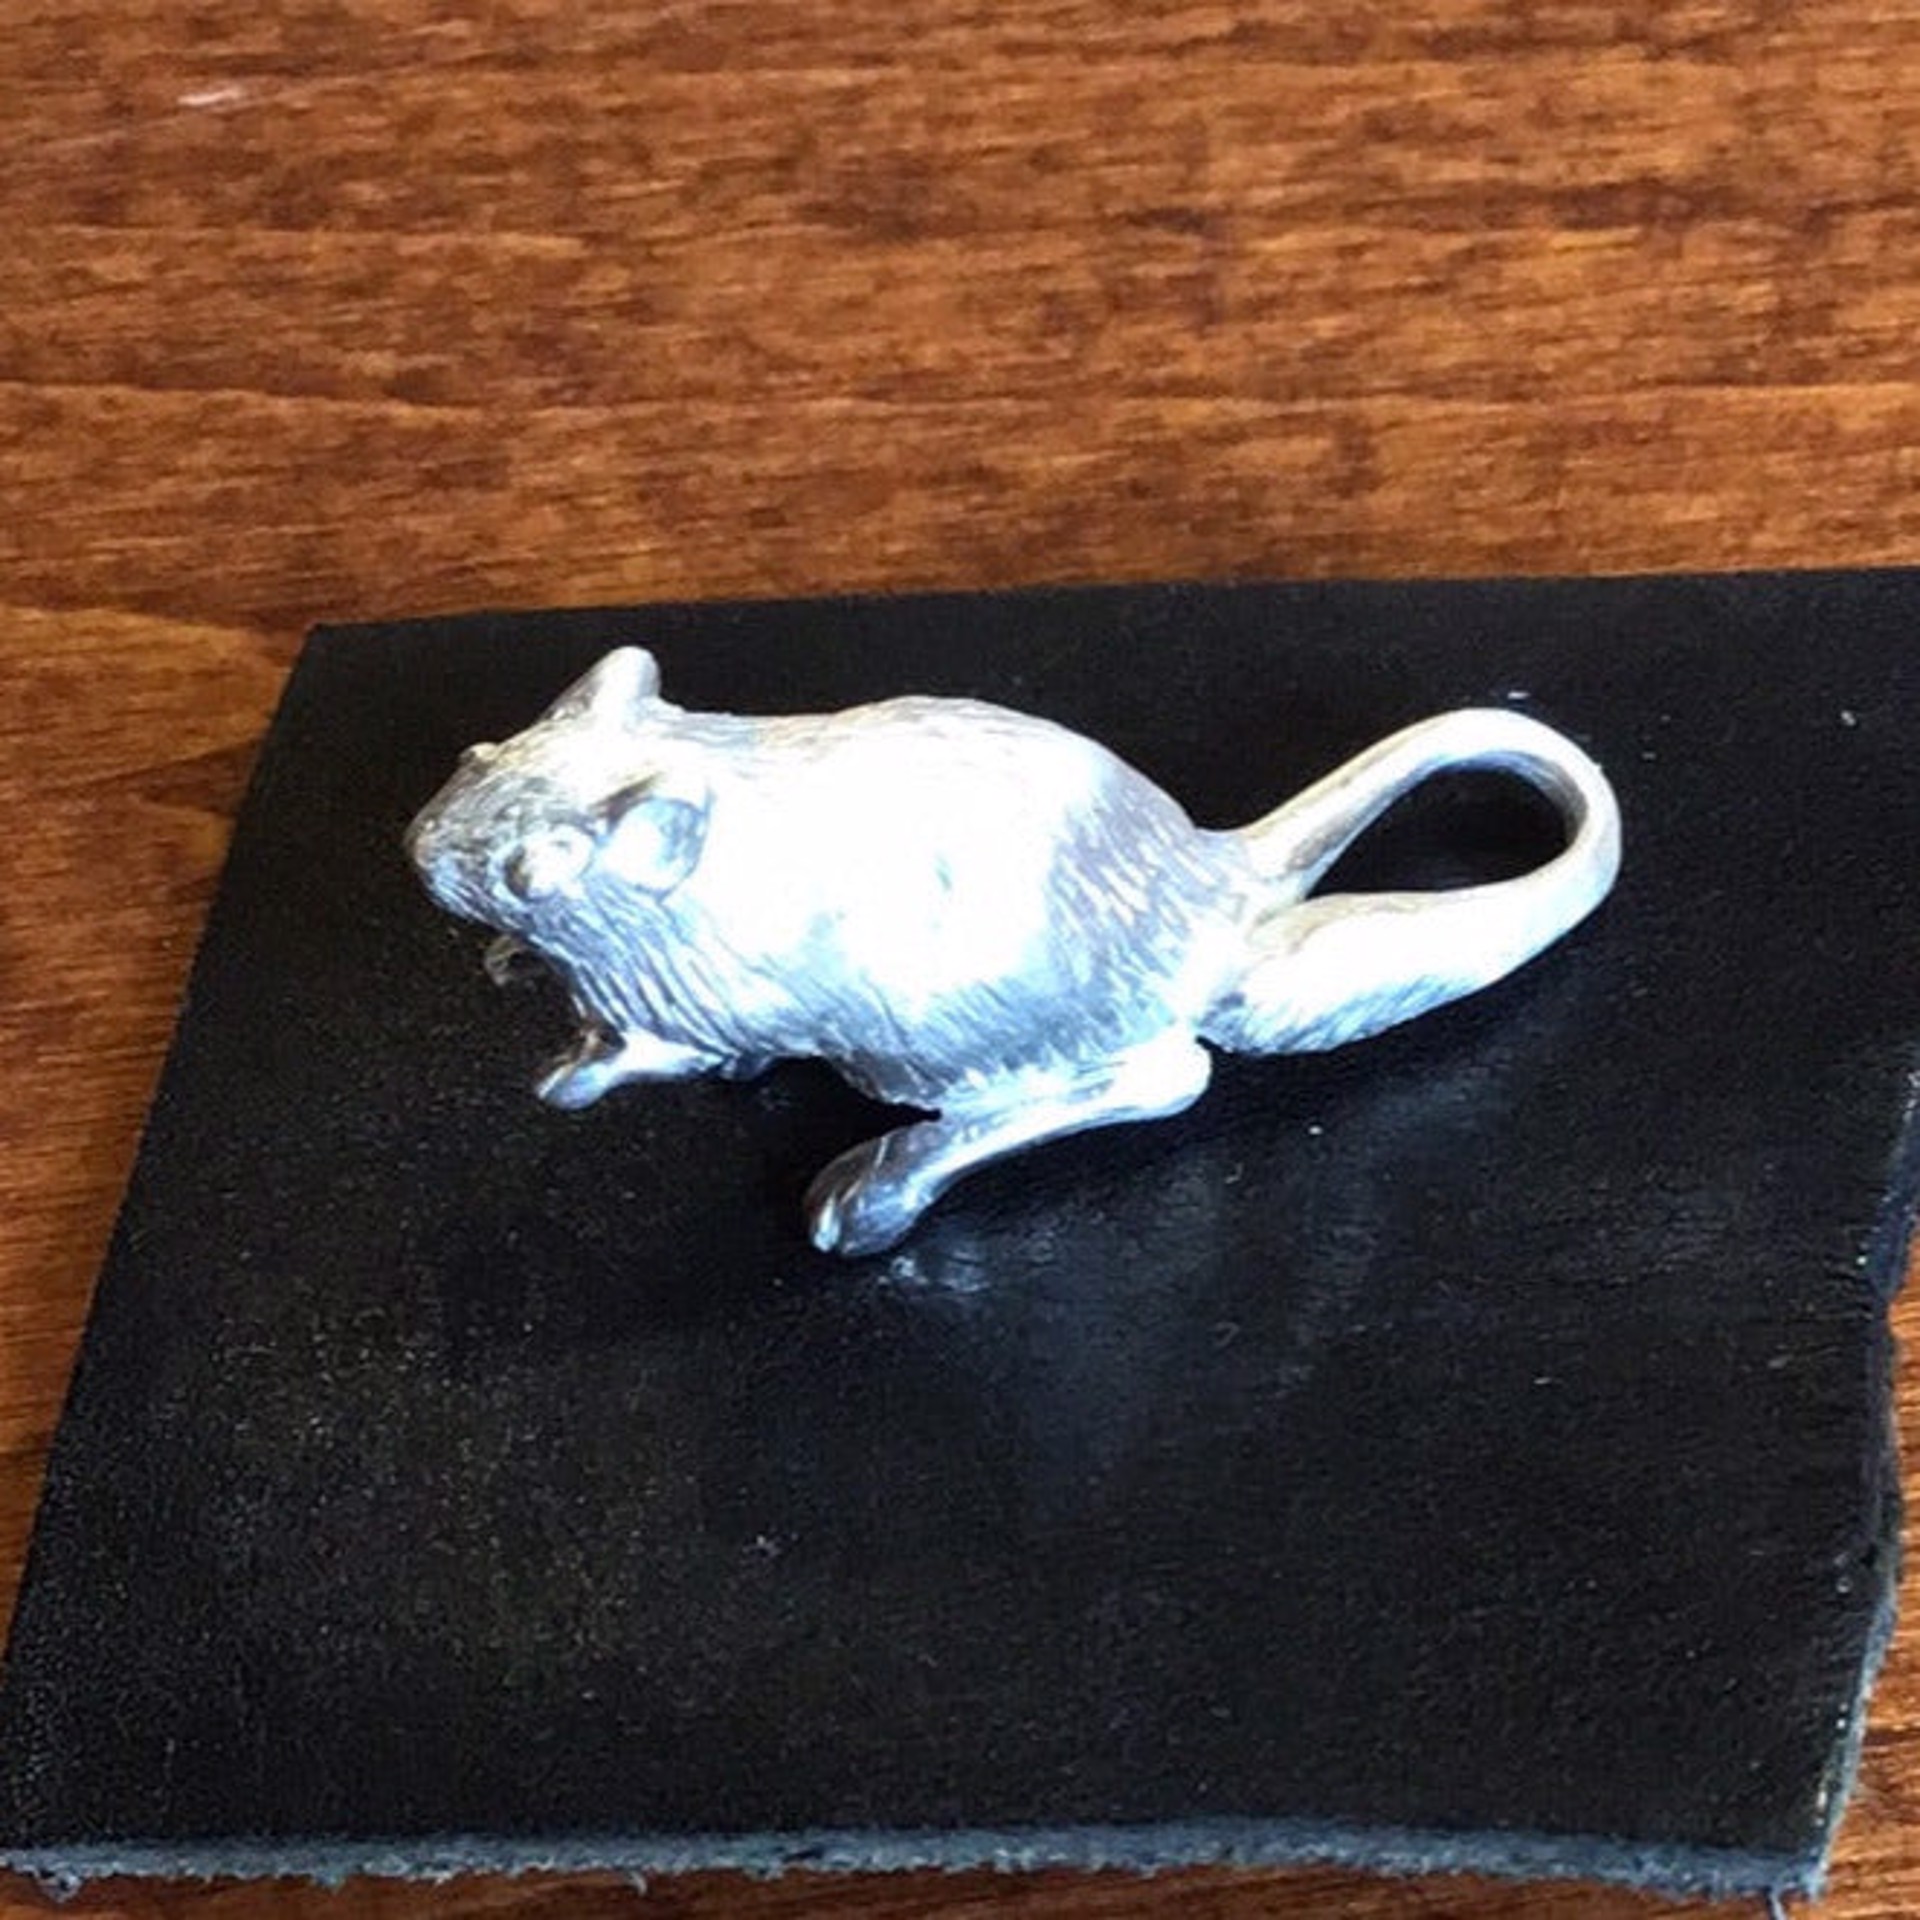 Kangaroo Rat pin by Clementine & Co. Jewelry